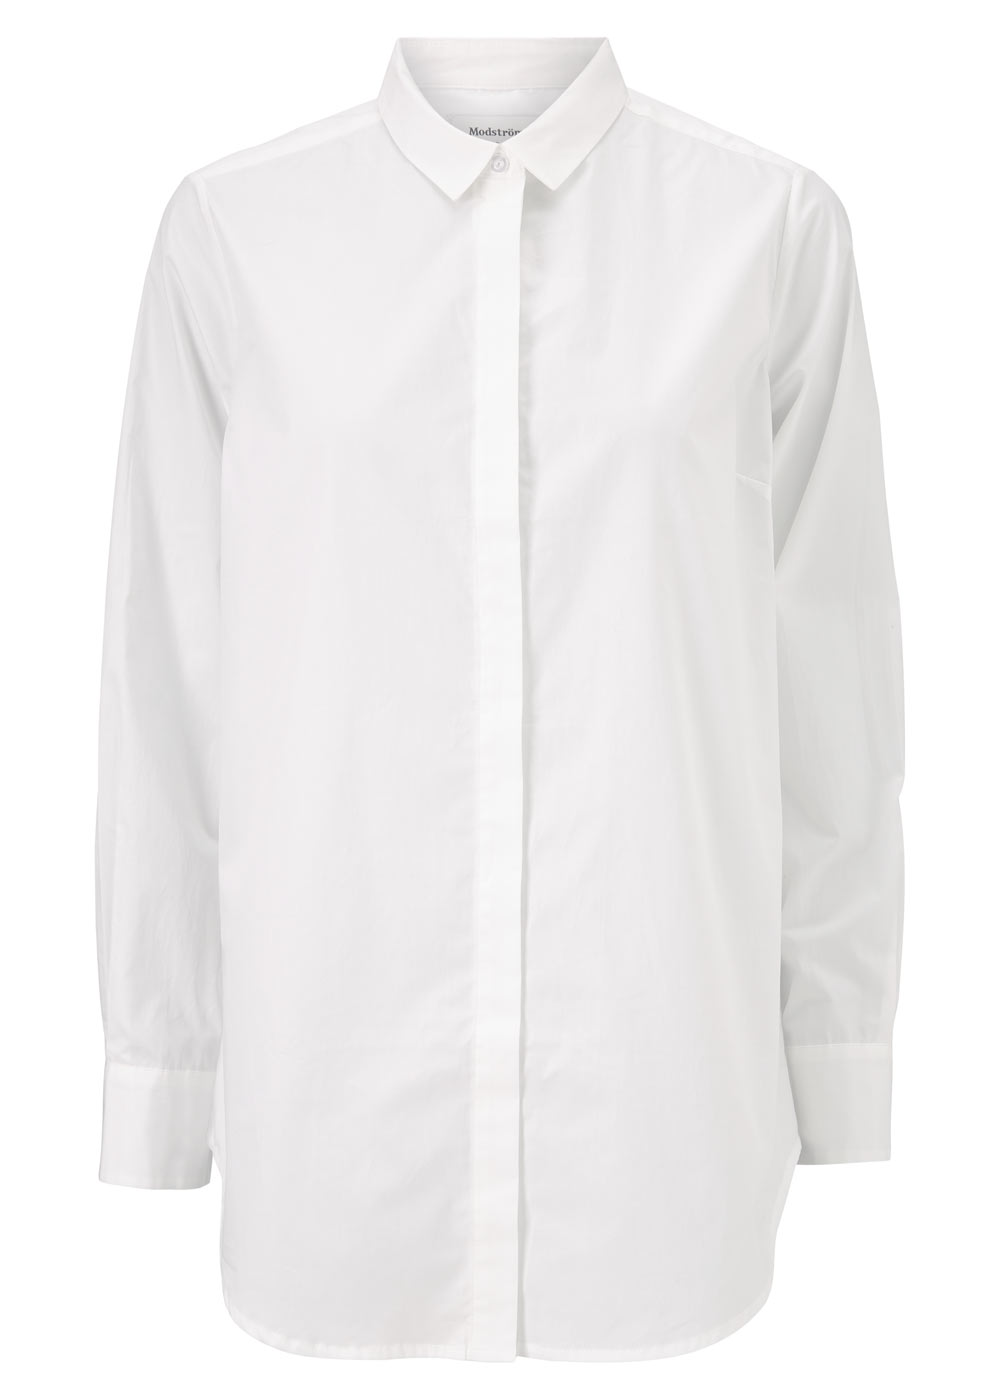 Arthur skjorte, off white, x-small